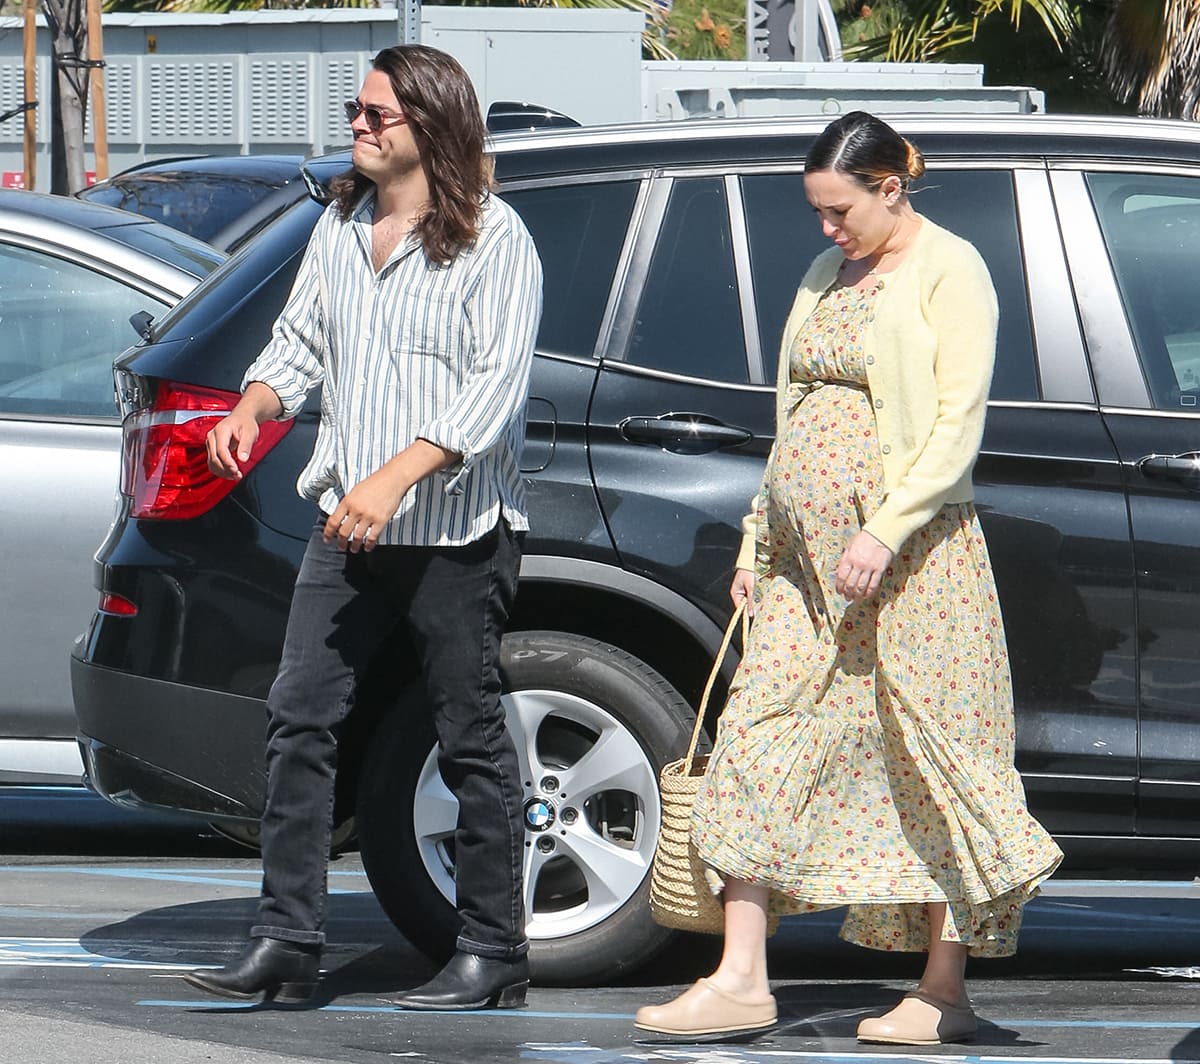 Derek Richard Thomas and pregnant Rumer Willis running errands in West Hollywood on April 10, 2023